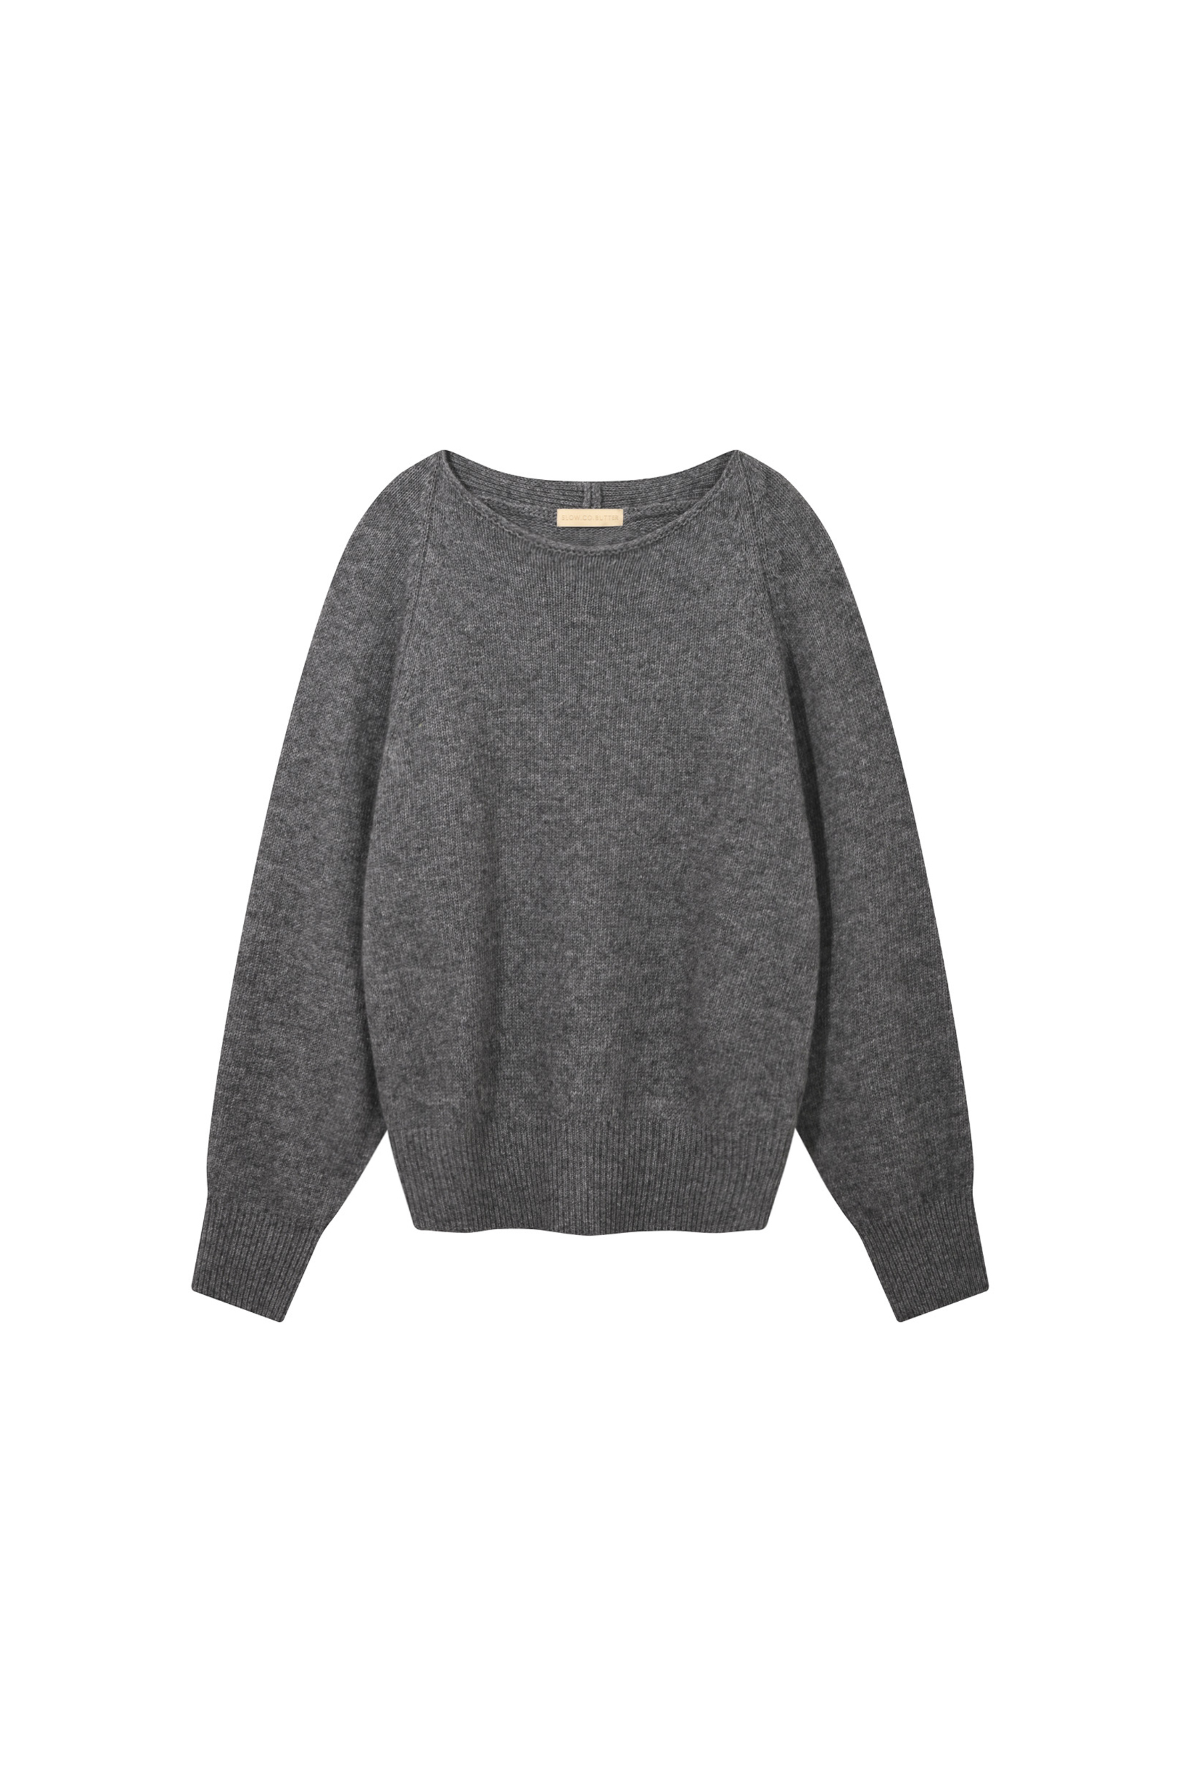 [SLOCO] Silhouette cashmere knit, dark grey